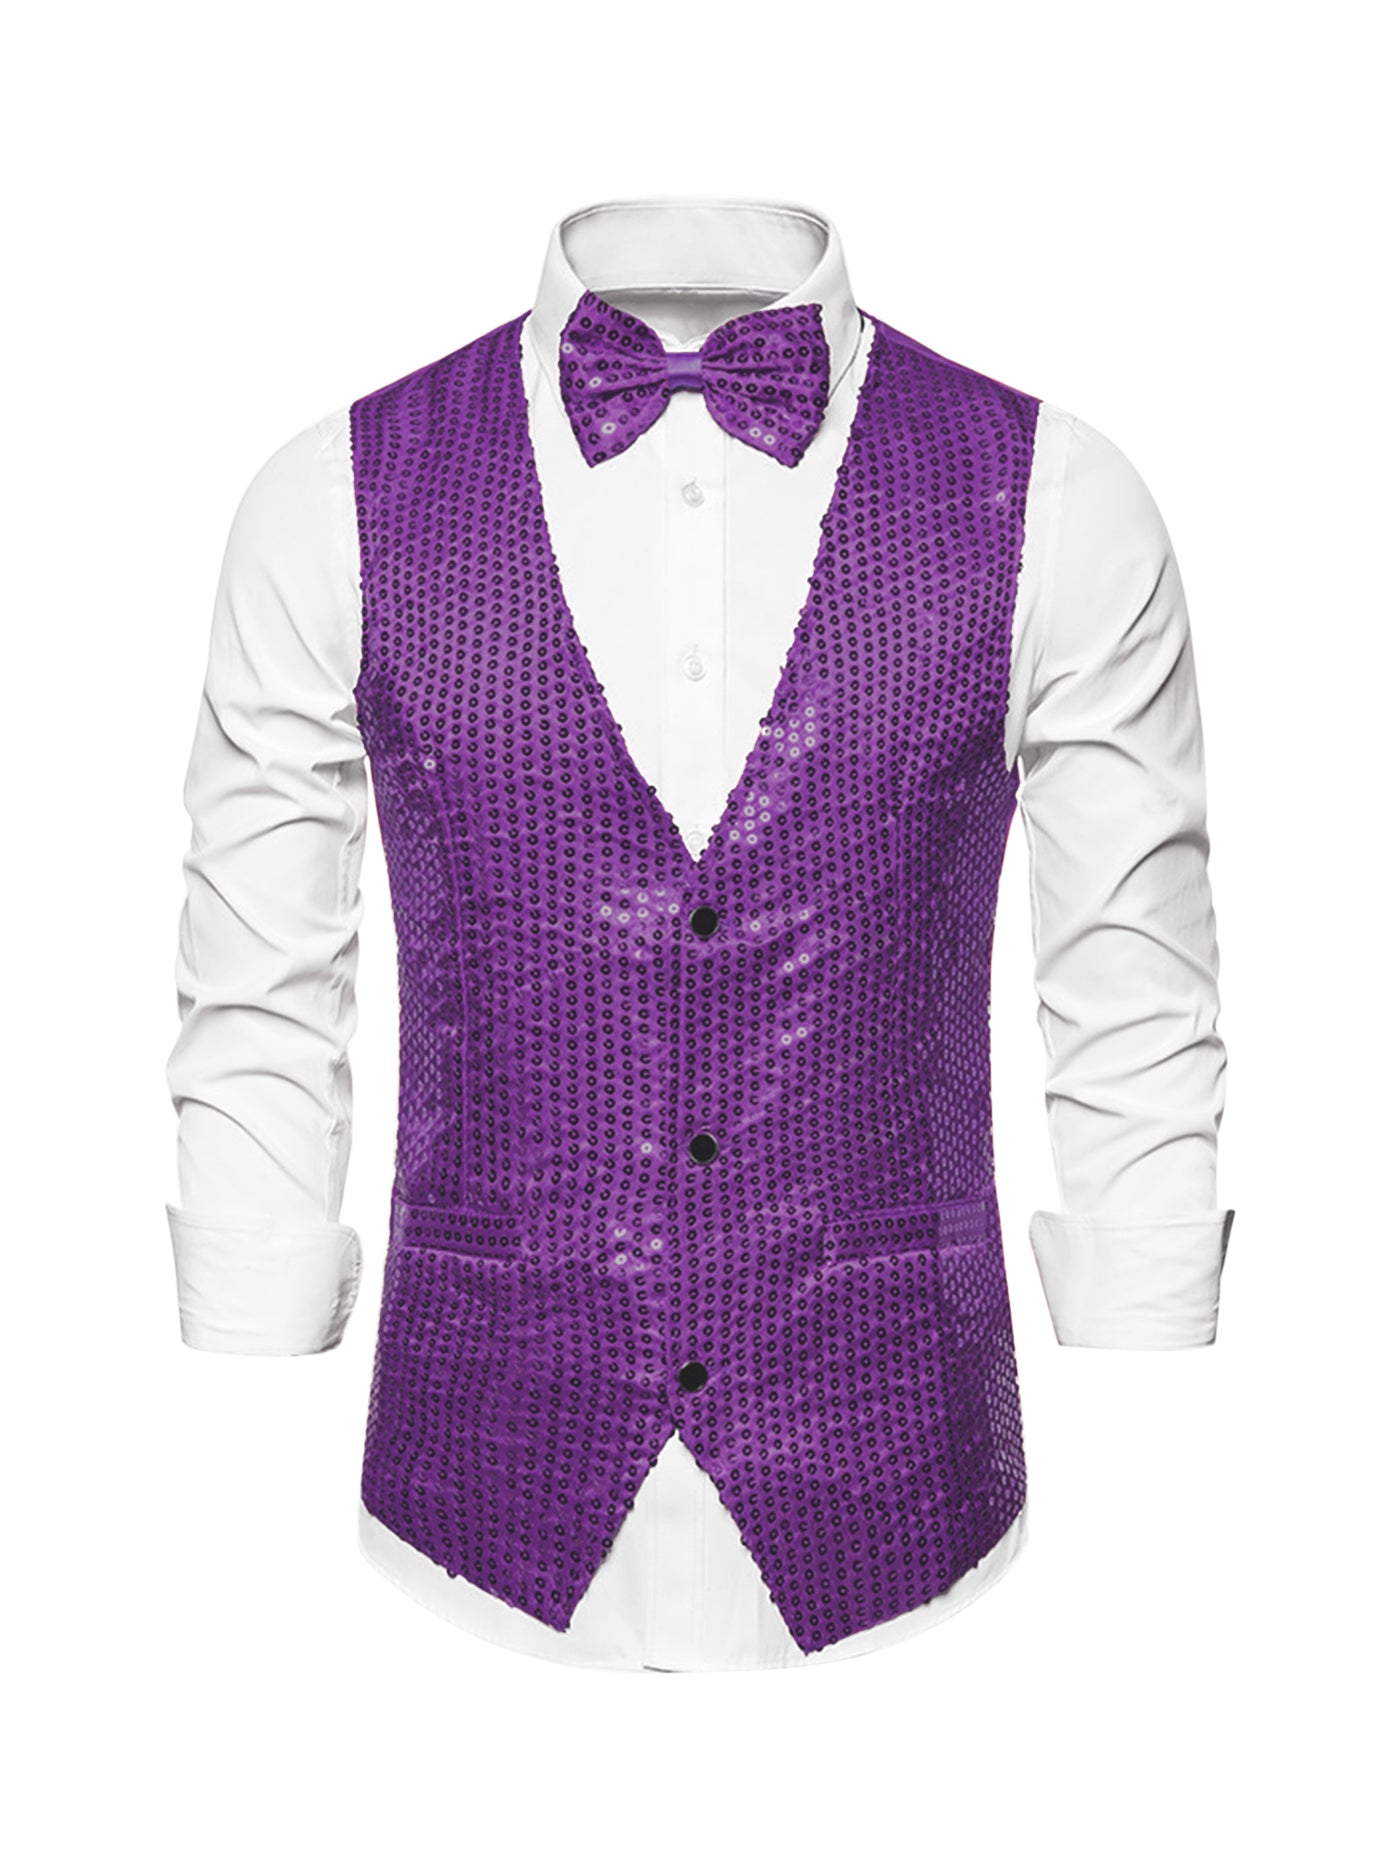 Bublédon Men's Sequin Waistcoat Shiny Sleeveless Party Prom Dress Suit Vest with Bow Tie